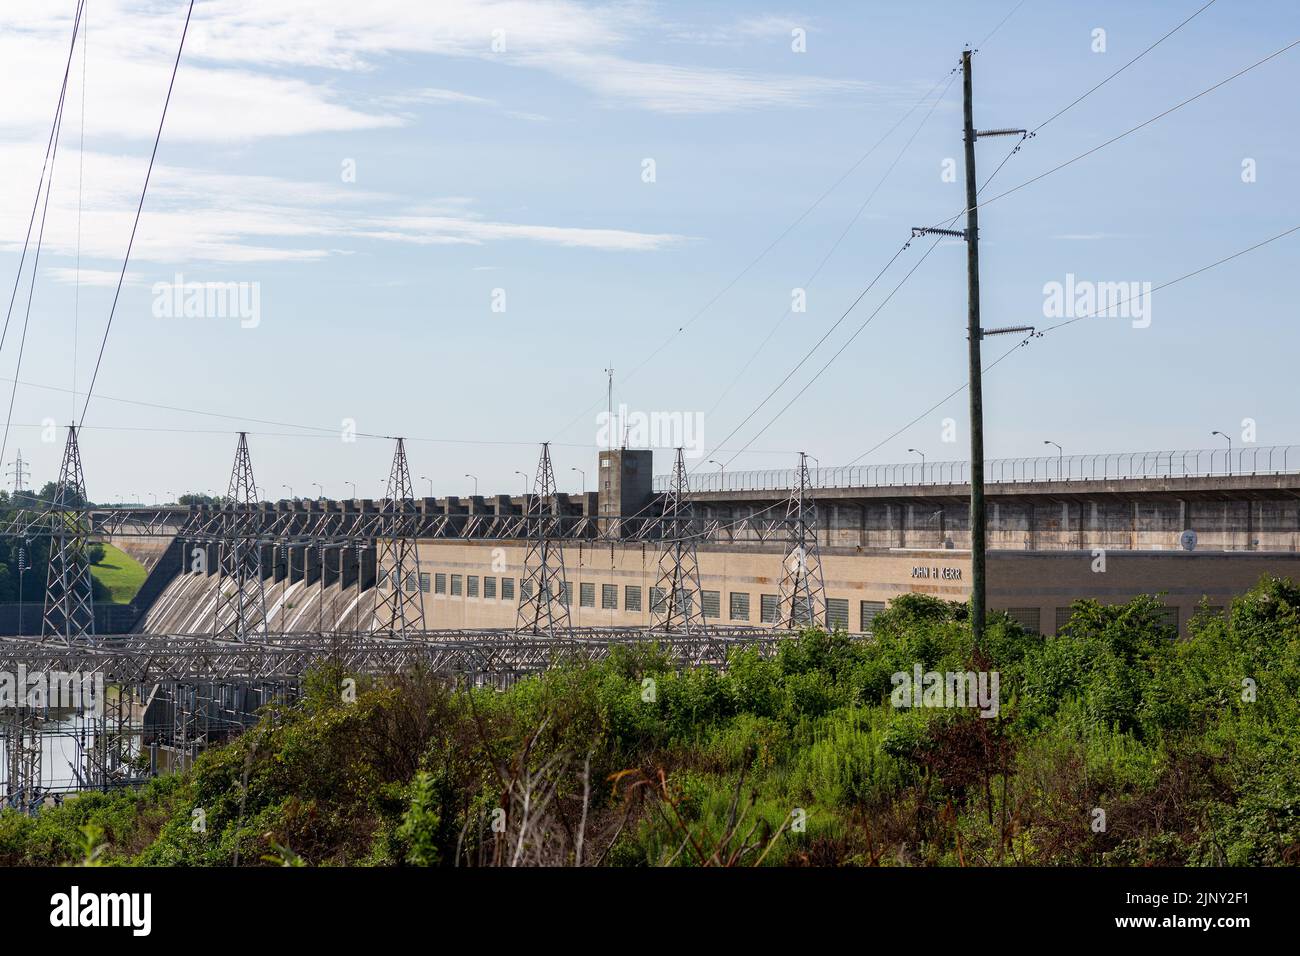 John H Kerr dam near Boydton in Virginia US. Hydro electric power but not generating so a quiet peaceful shot. Stock Photo